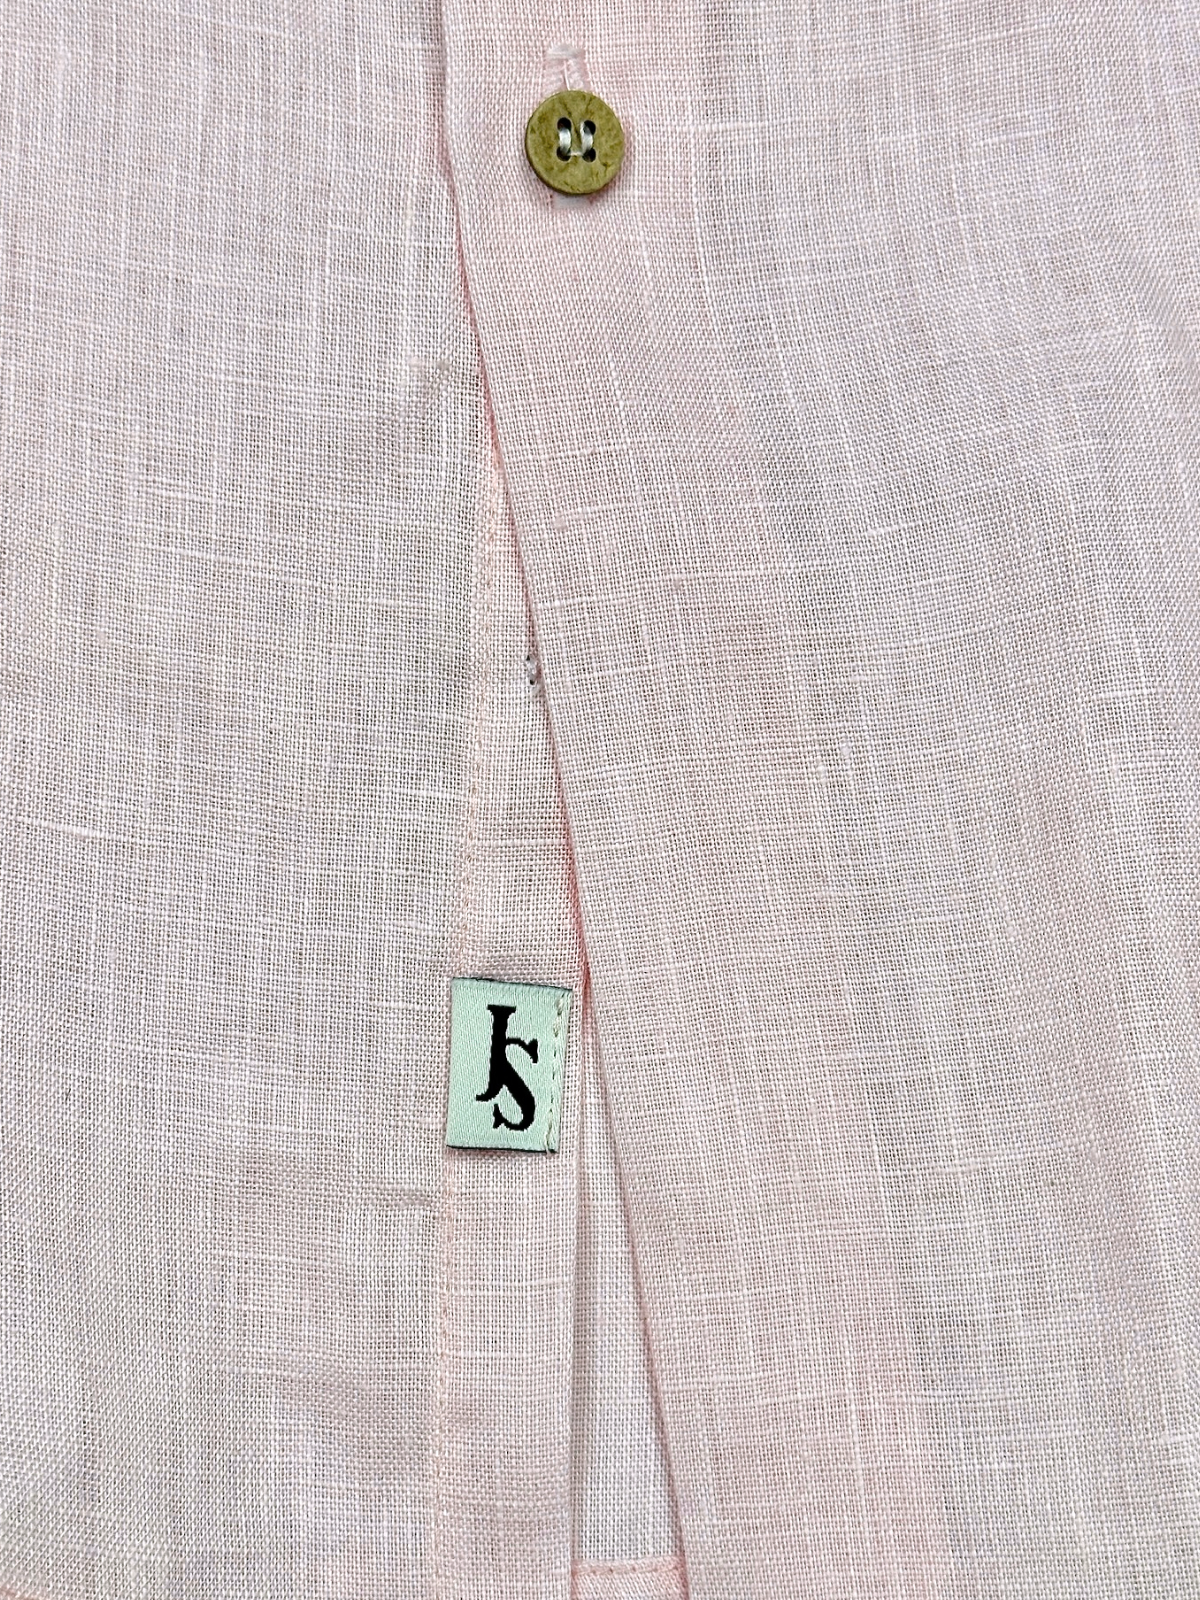 Byron Bay Linen L/S Shirt - Baby Pink